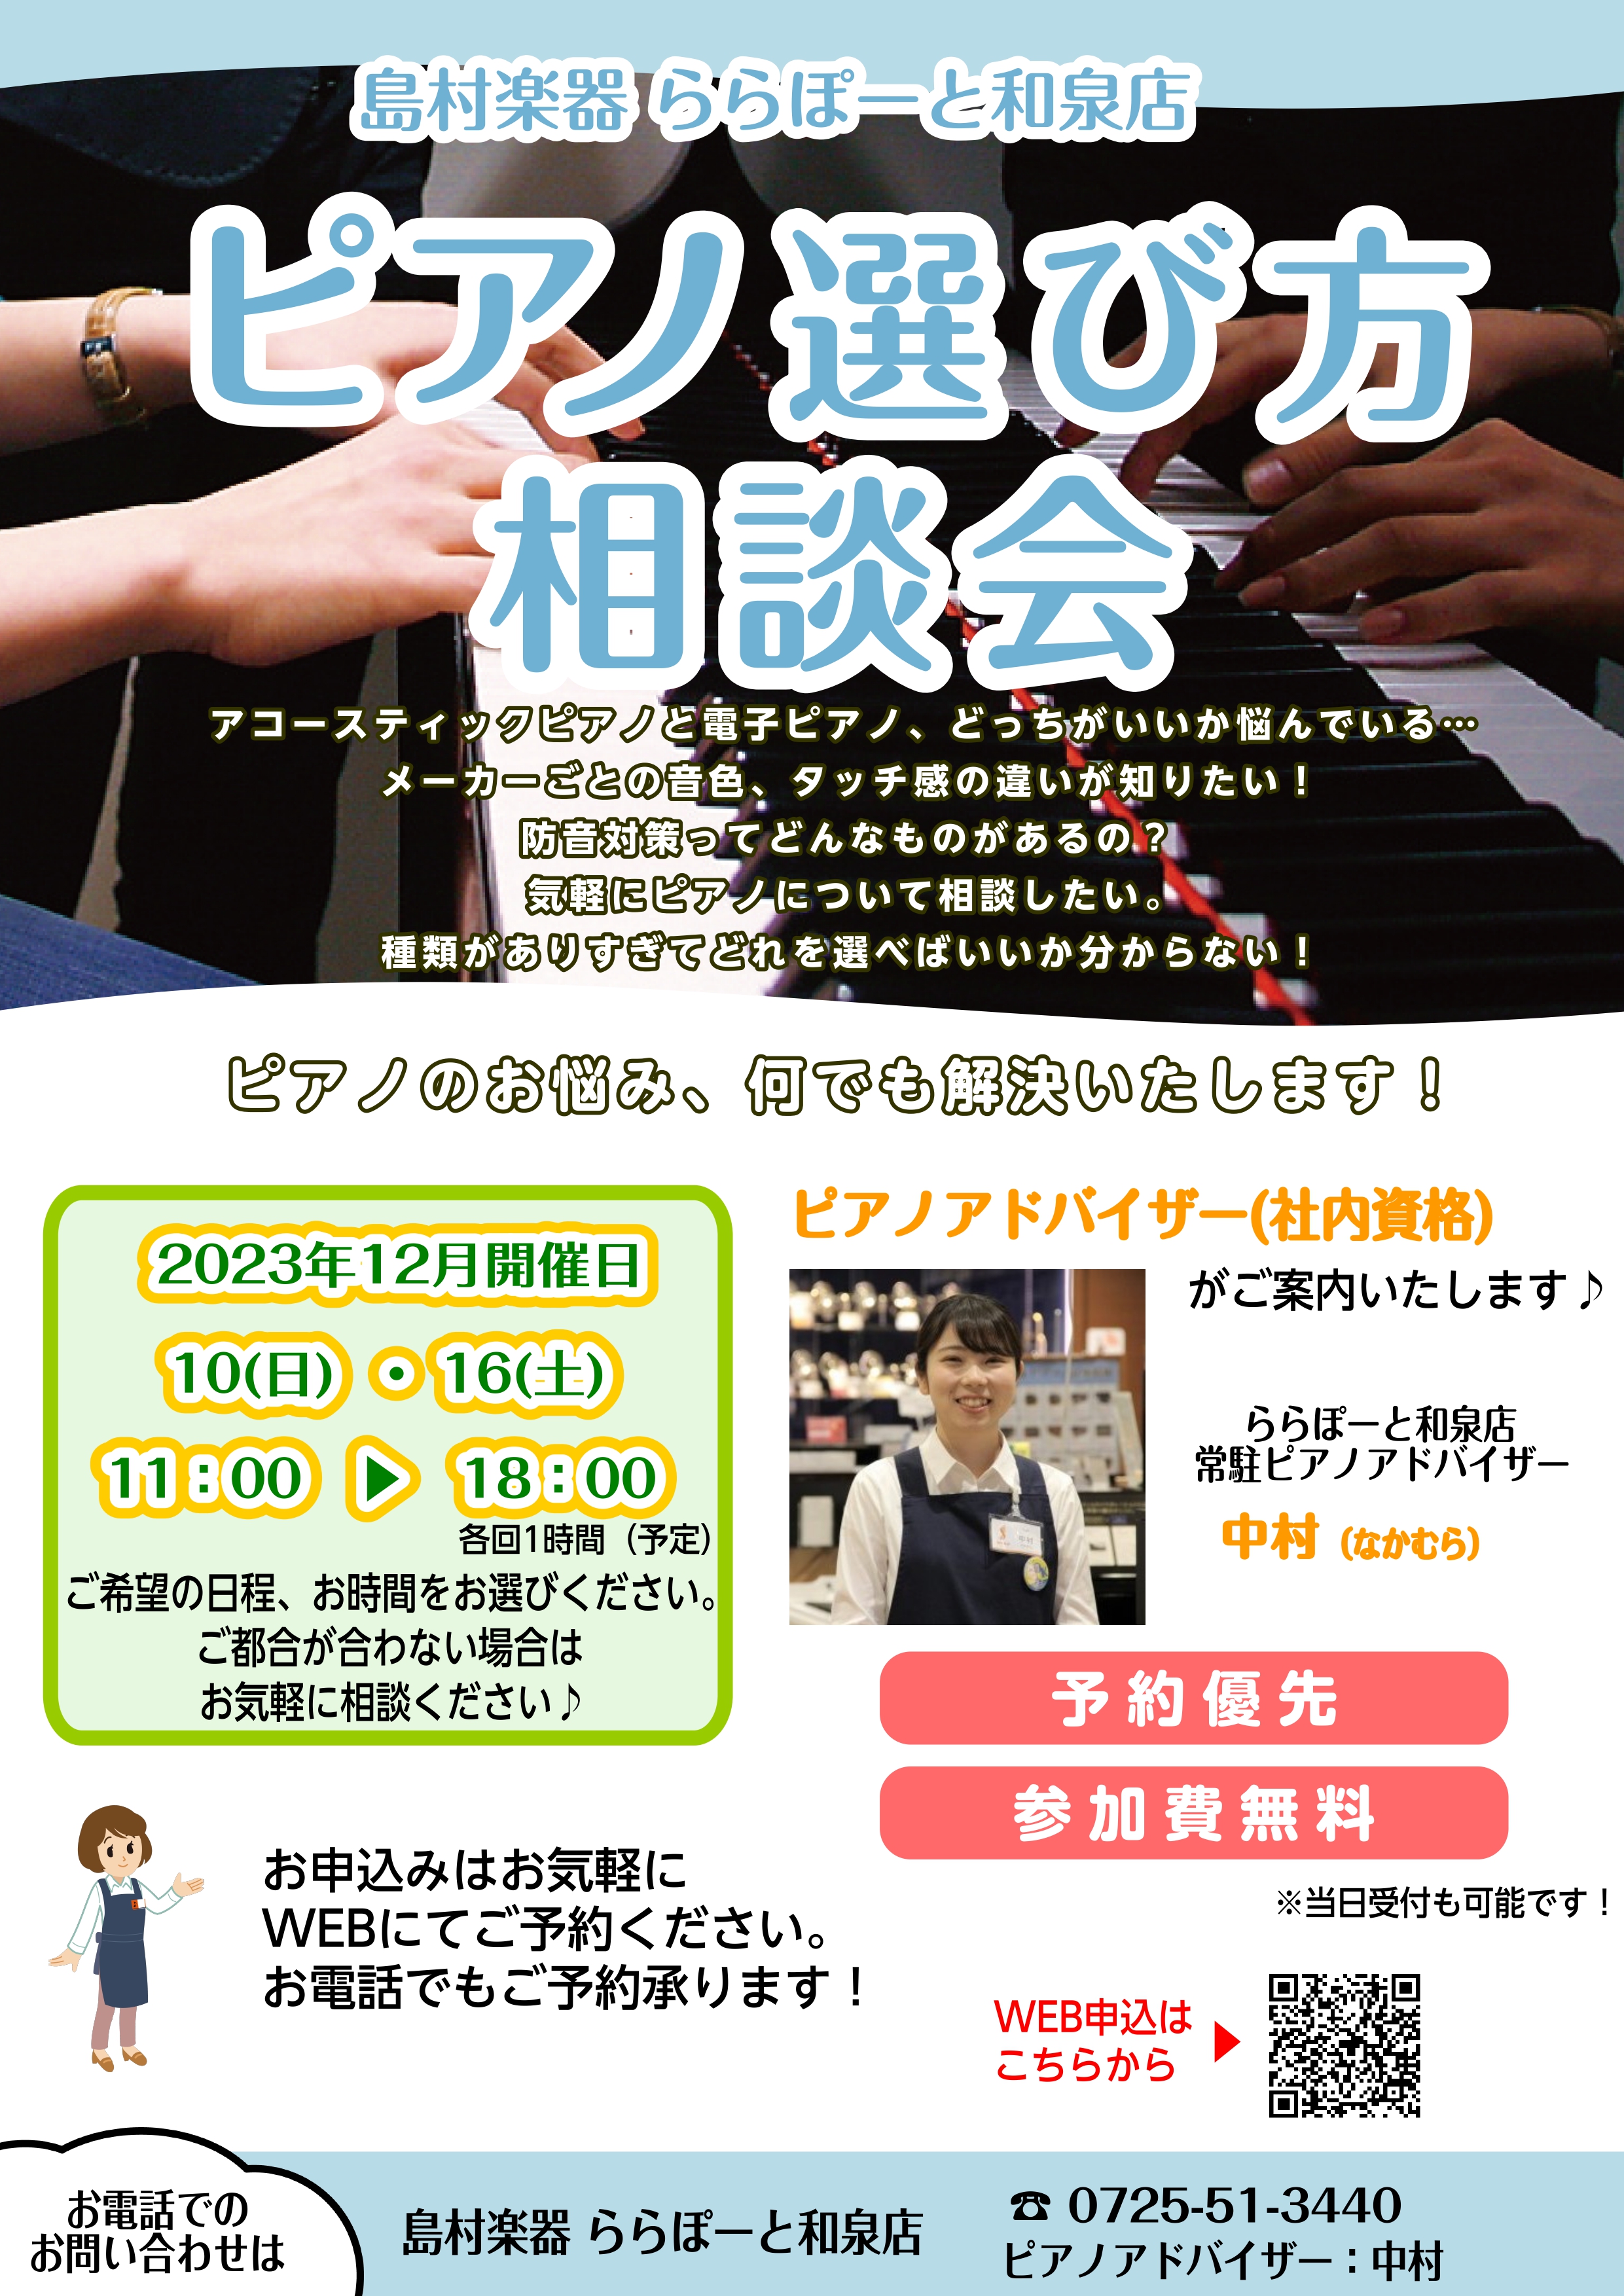 🎄HAPPY MUSIC Xmas🎅【電子ピアノ・キーボードフェア開催】～12/25(月